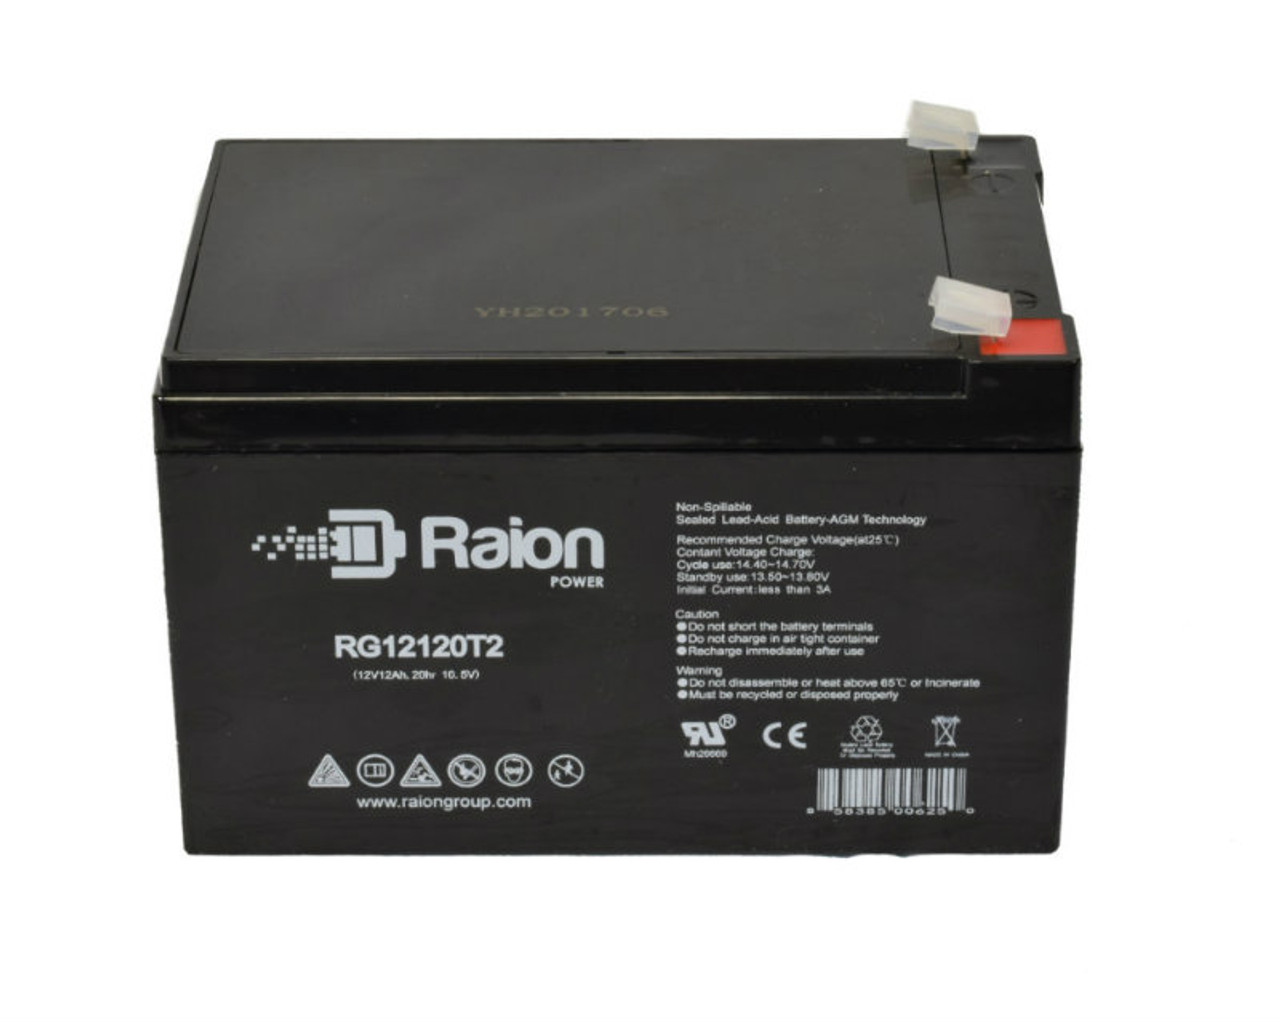 Raion Power RG12120T2 SLA Battery for Drypower 12GB12C